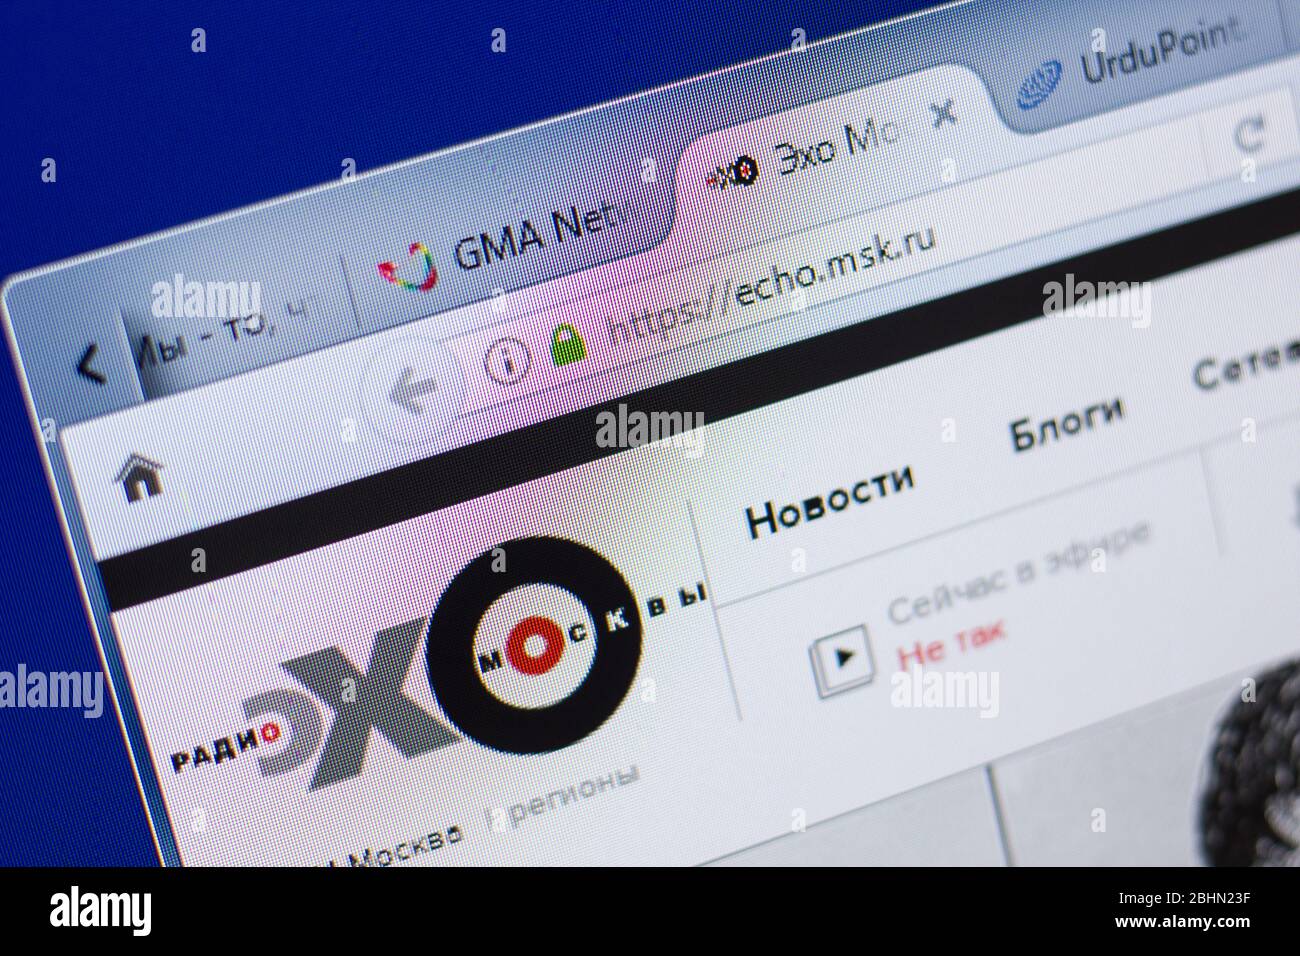 Ryazan, Russia - May 13, 2018: Echo of Moscow website on the display of PC,  url - Echo.msk.ru Stock Photo - Alamy